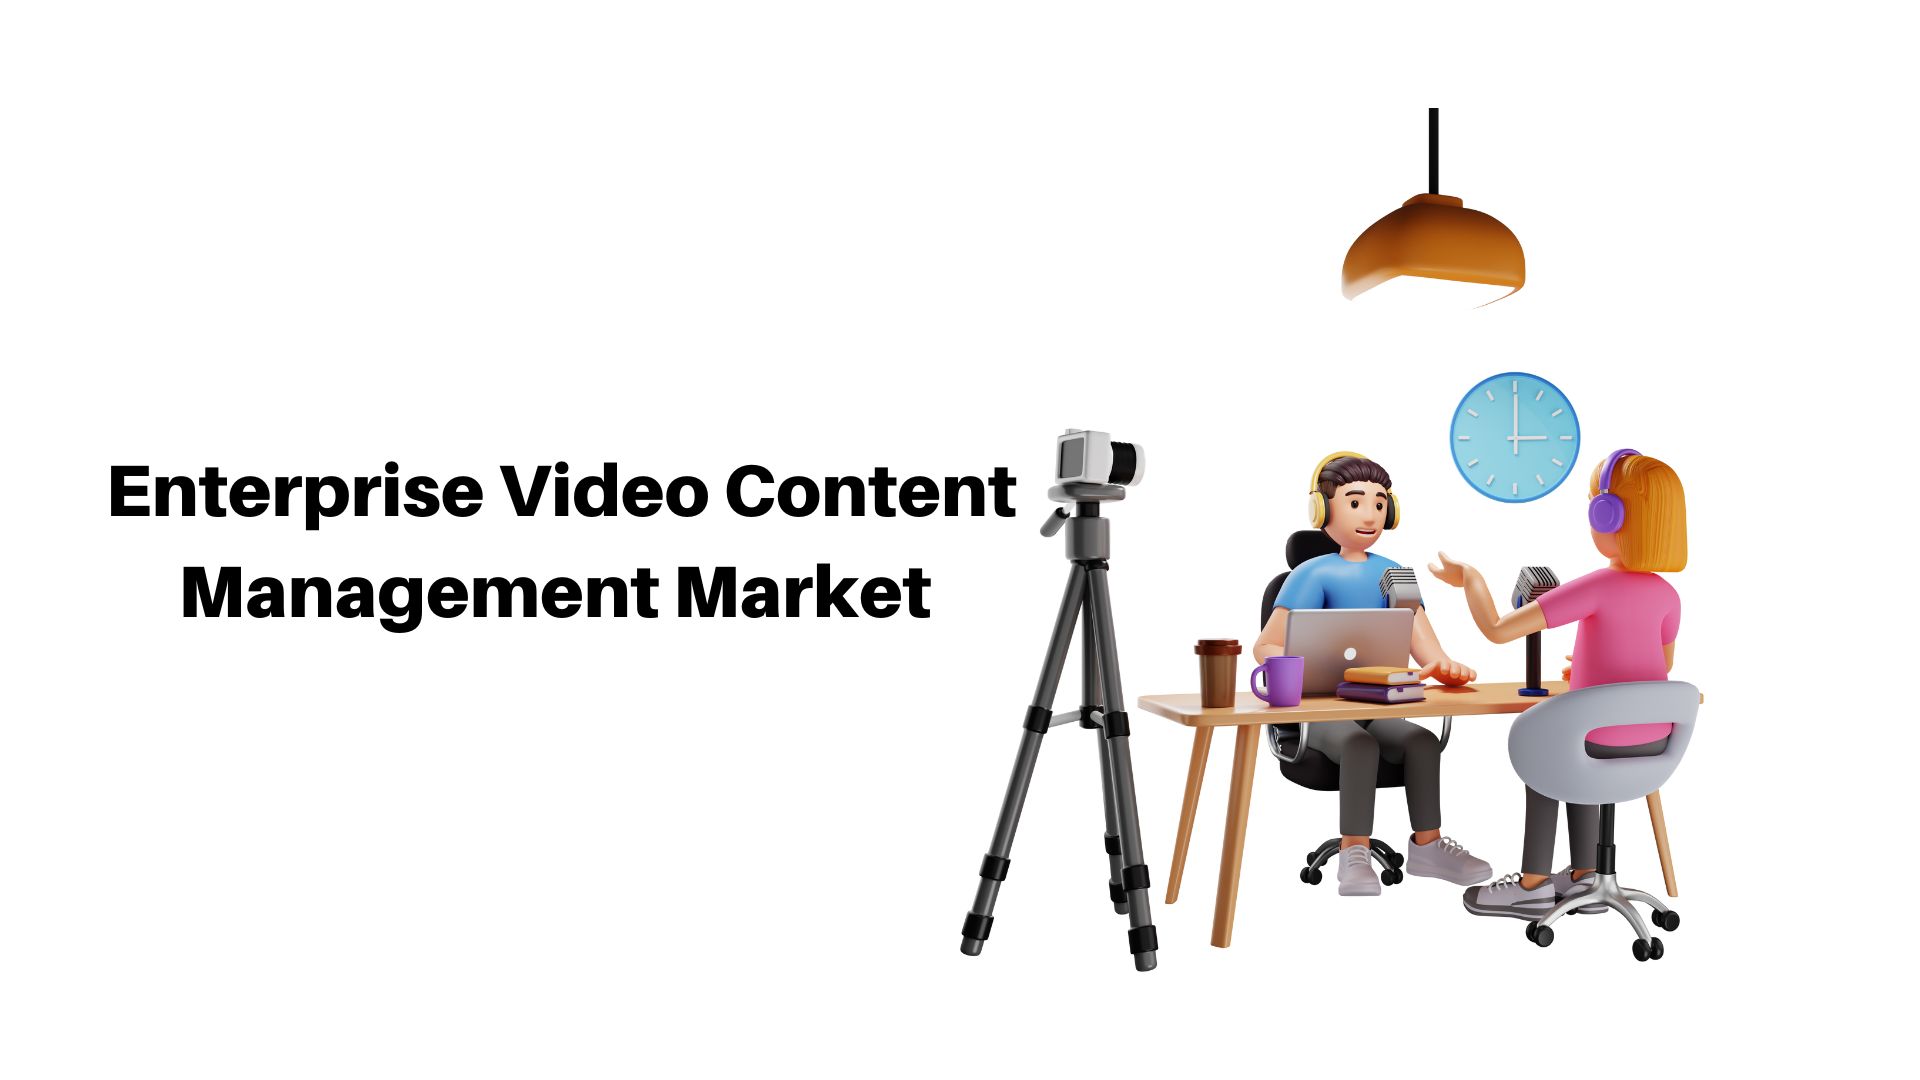 Enterprise Video Content Management Market will anticipate around USD 16.86 Bn by 2033